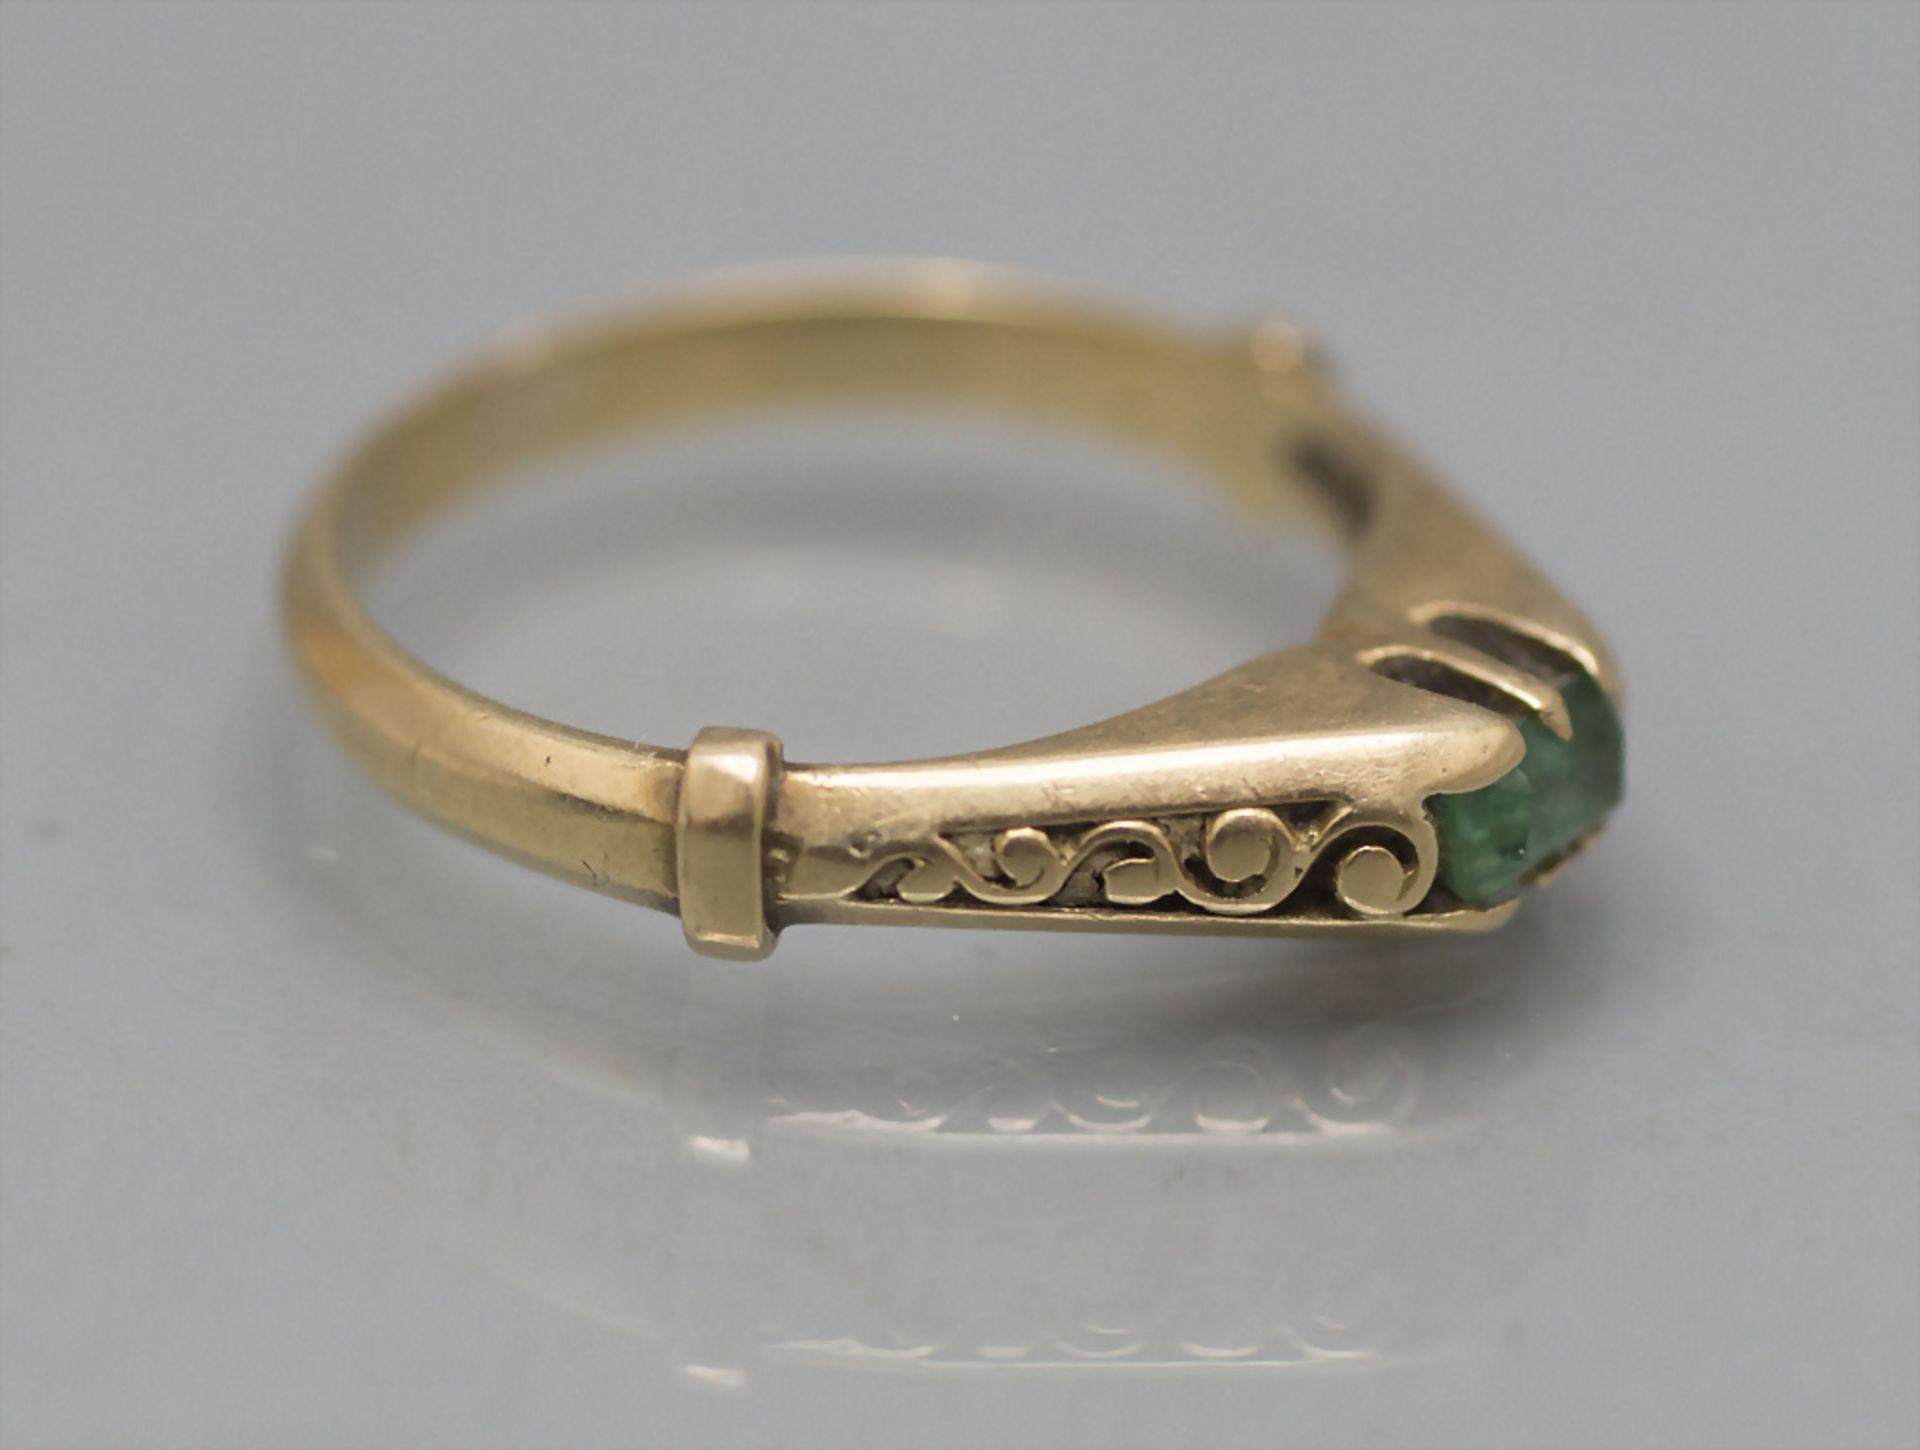 Damenring mit Smaragd / A ladies 14 ct gold ring with emerald - Bild 3 aus 3